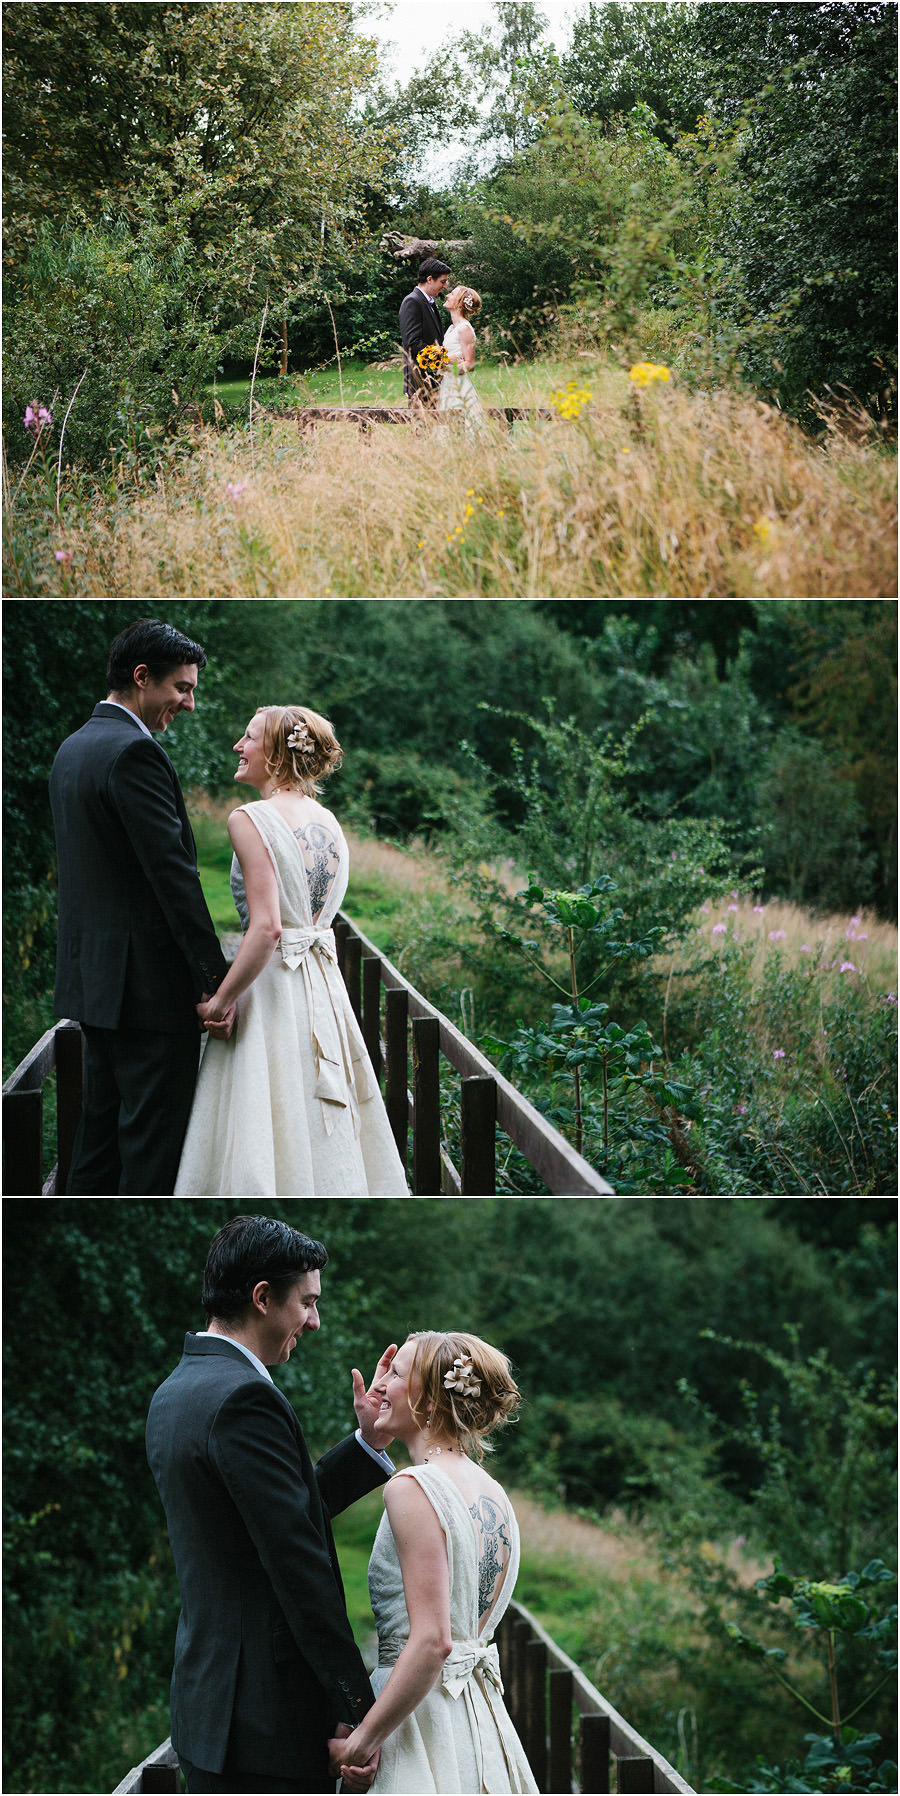 Heather and Max’s post-wedding garden shoot